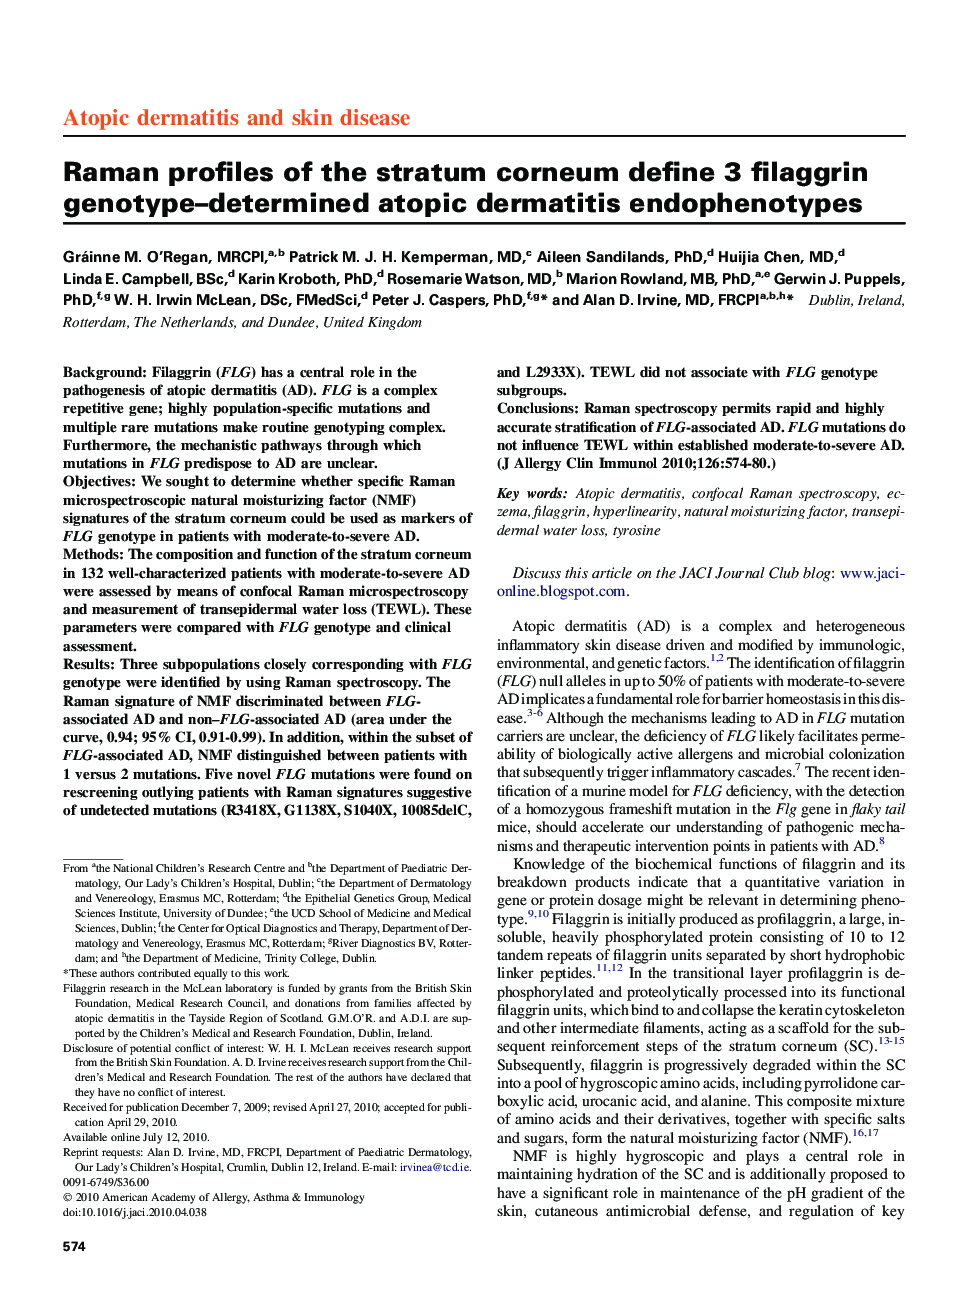 Raman profiles of the stratum corneum define 3 filaggrin genotype-determined atopic dermatitis endophenotypes